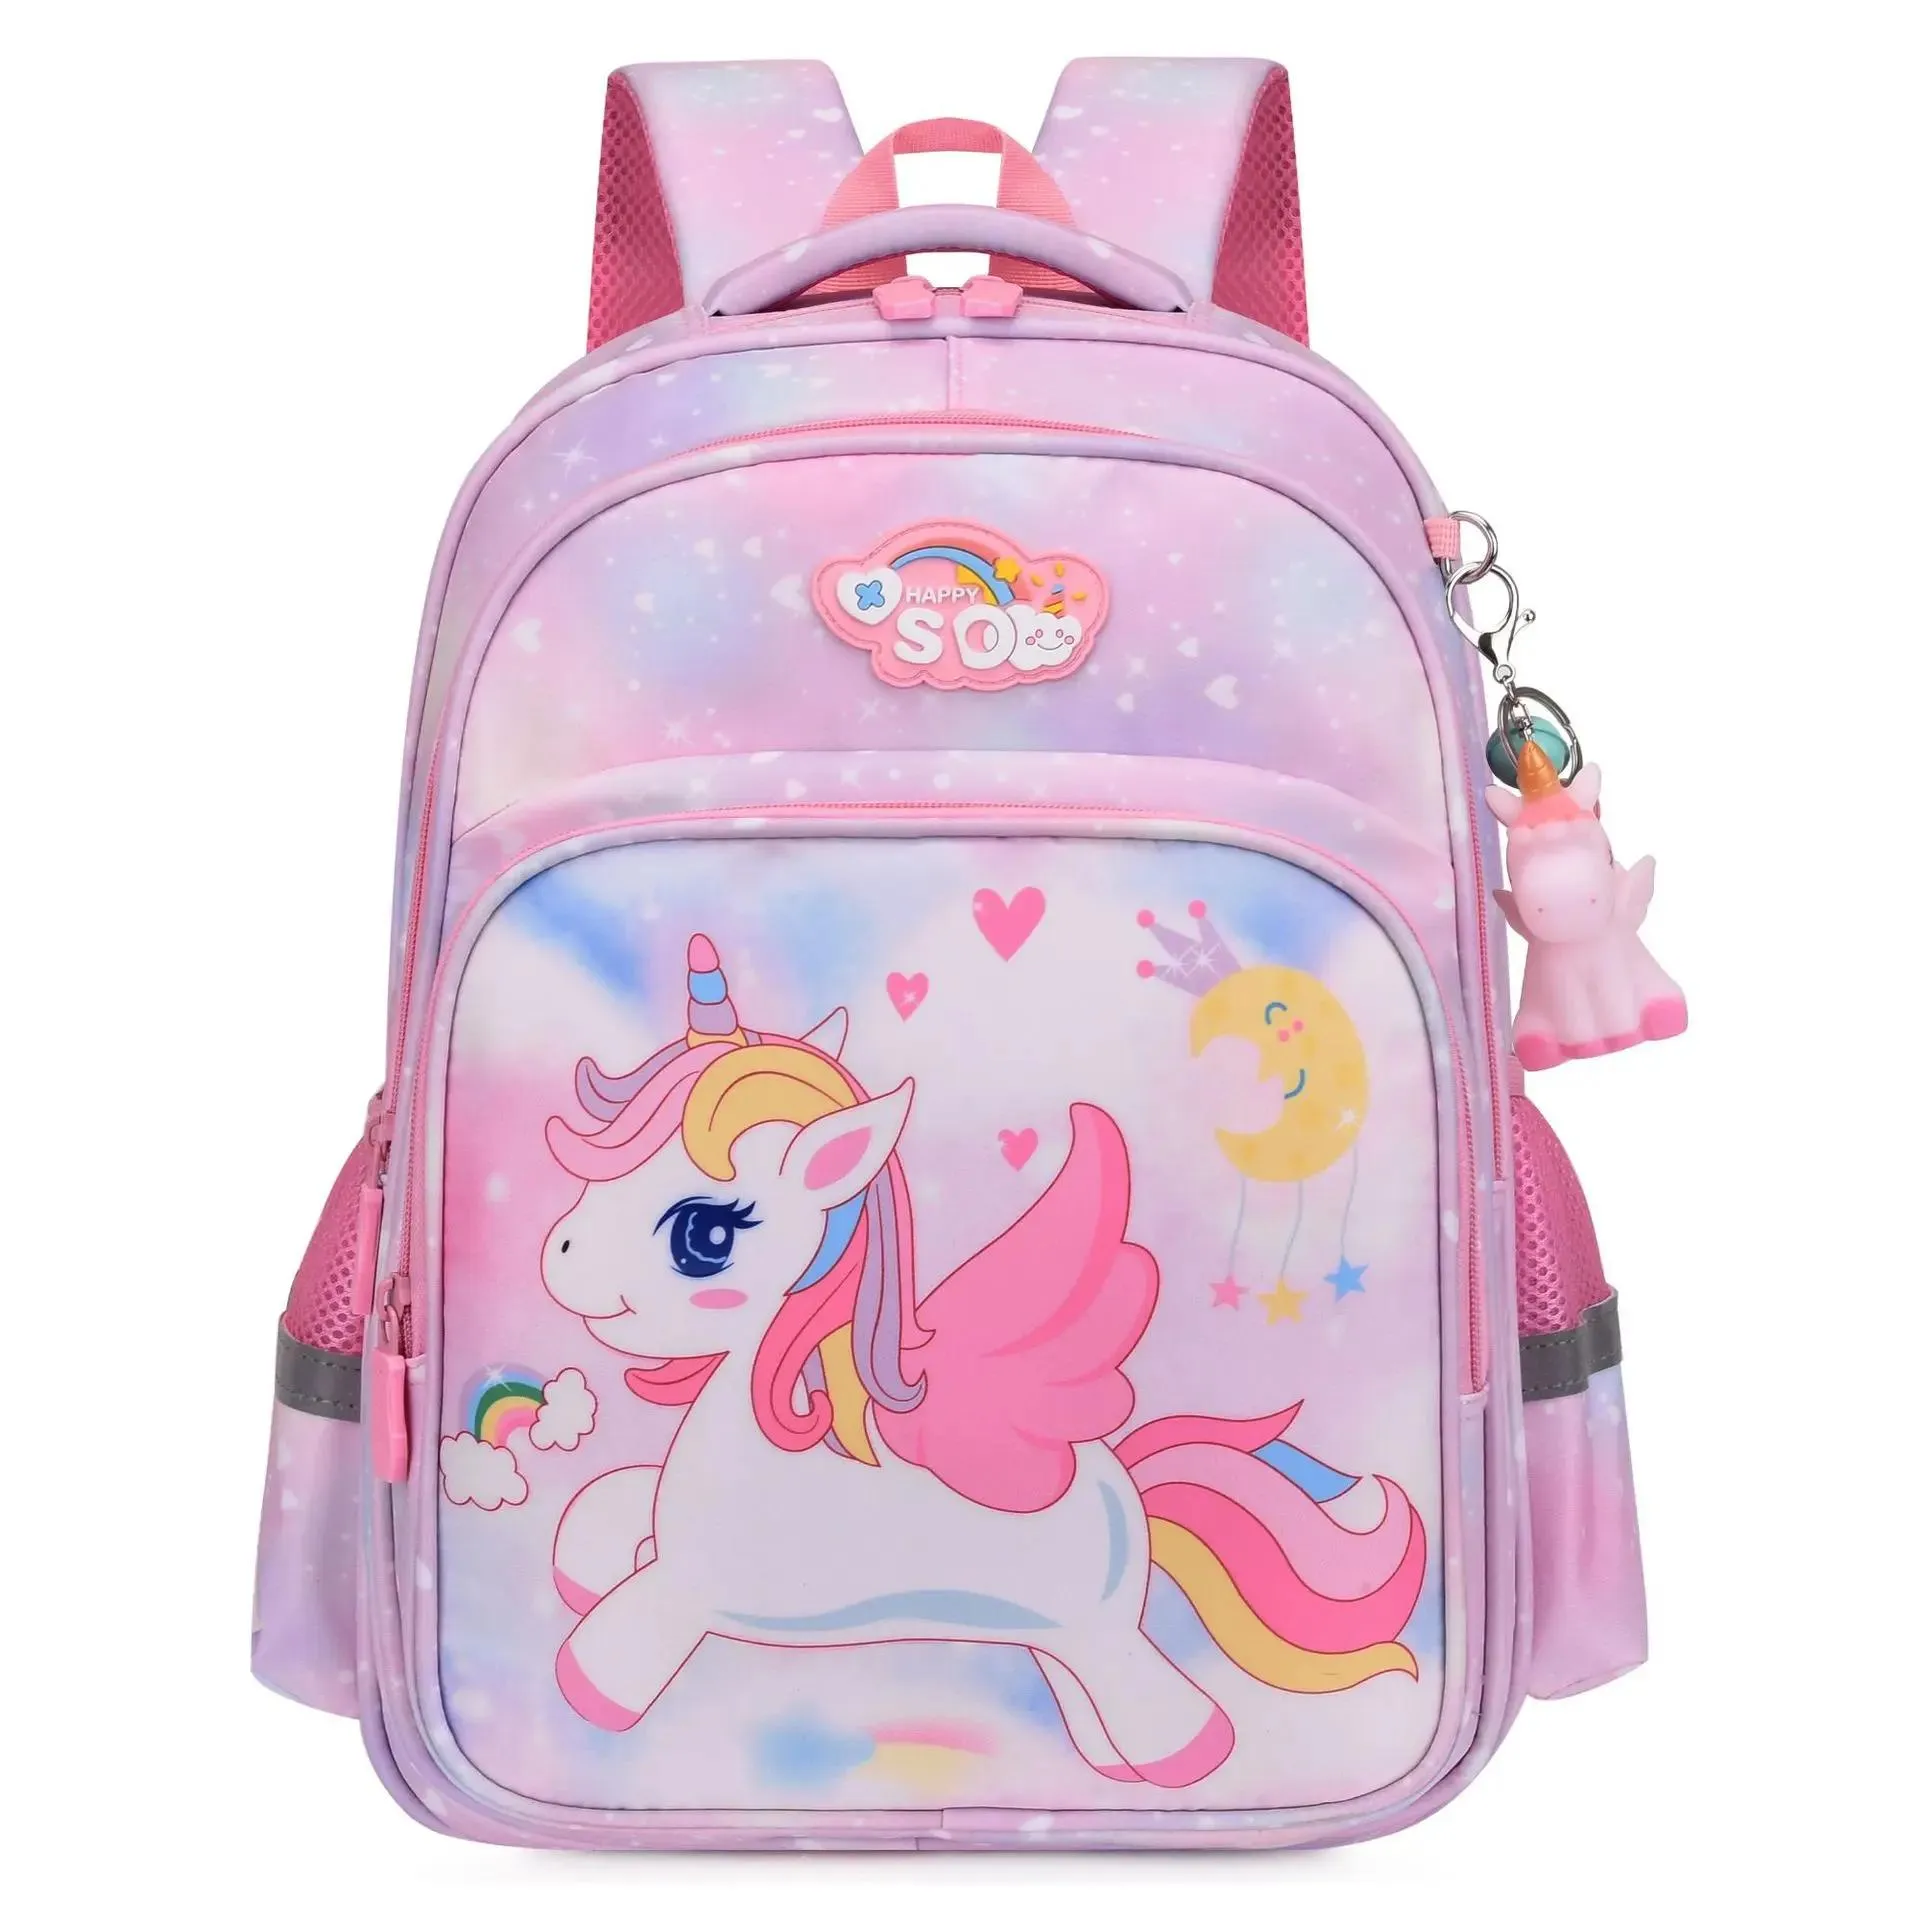 Сумки милый мультфильм Unicorn Girls School Bags Детские школьные школьные рюкзаки рюкзак школьные сумки Lager емкость Kawaii Kids Backpacks 2 размера